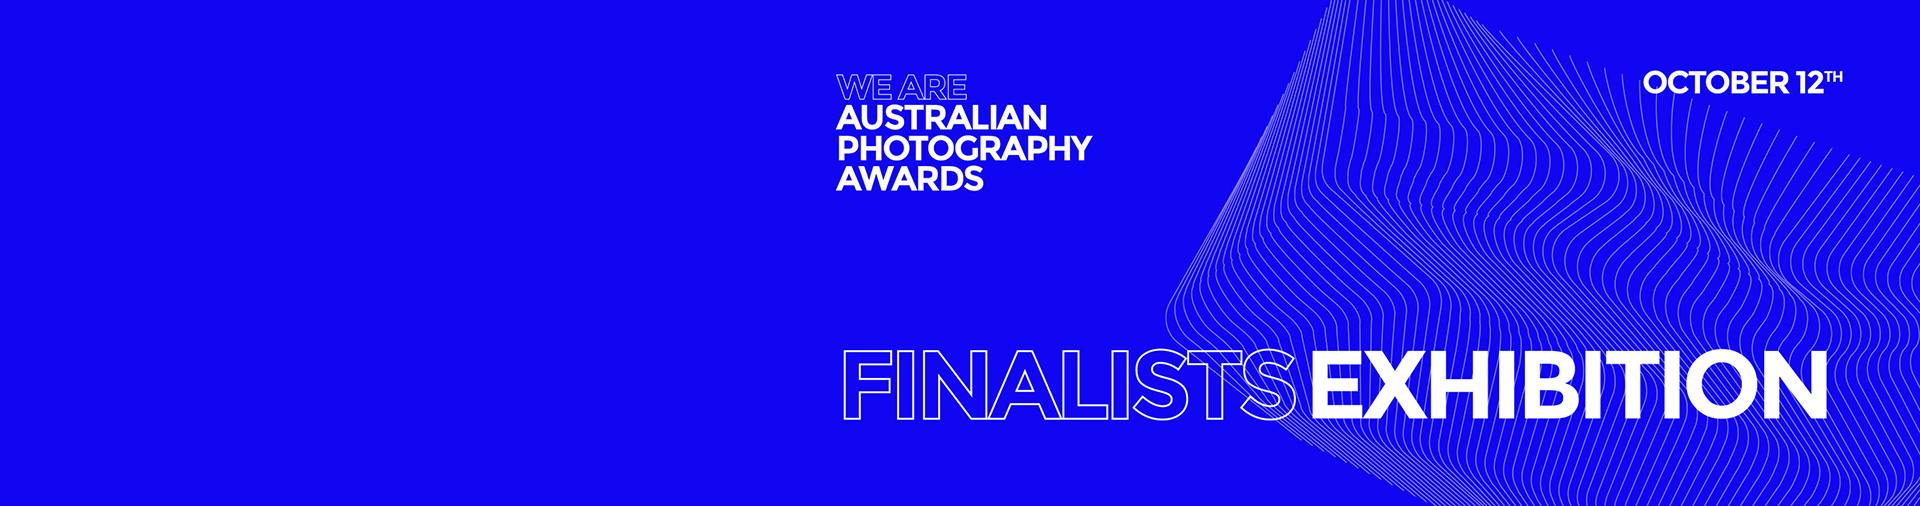 Australian Photography Awards Finalist Exhibition 2019